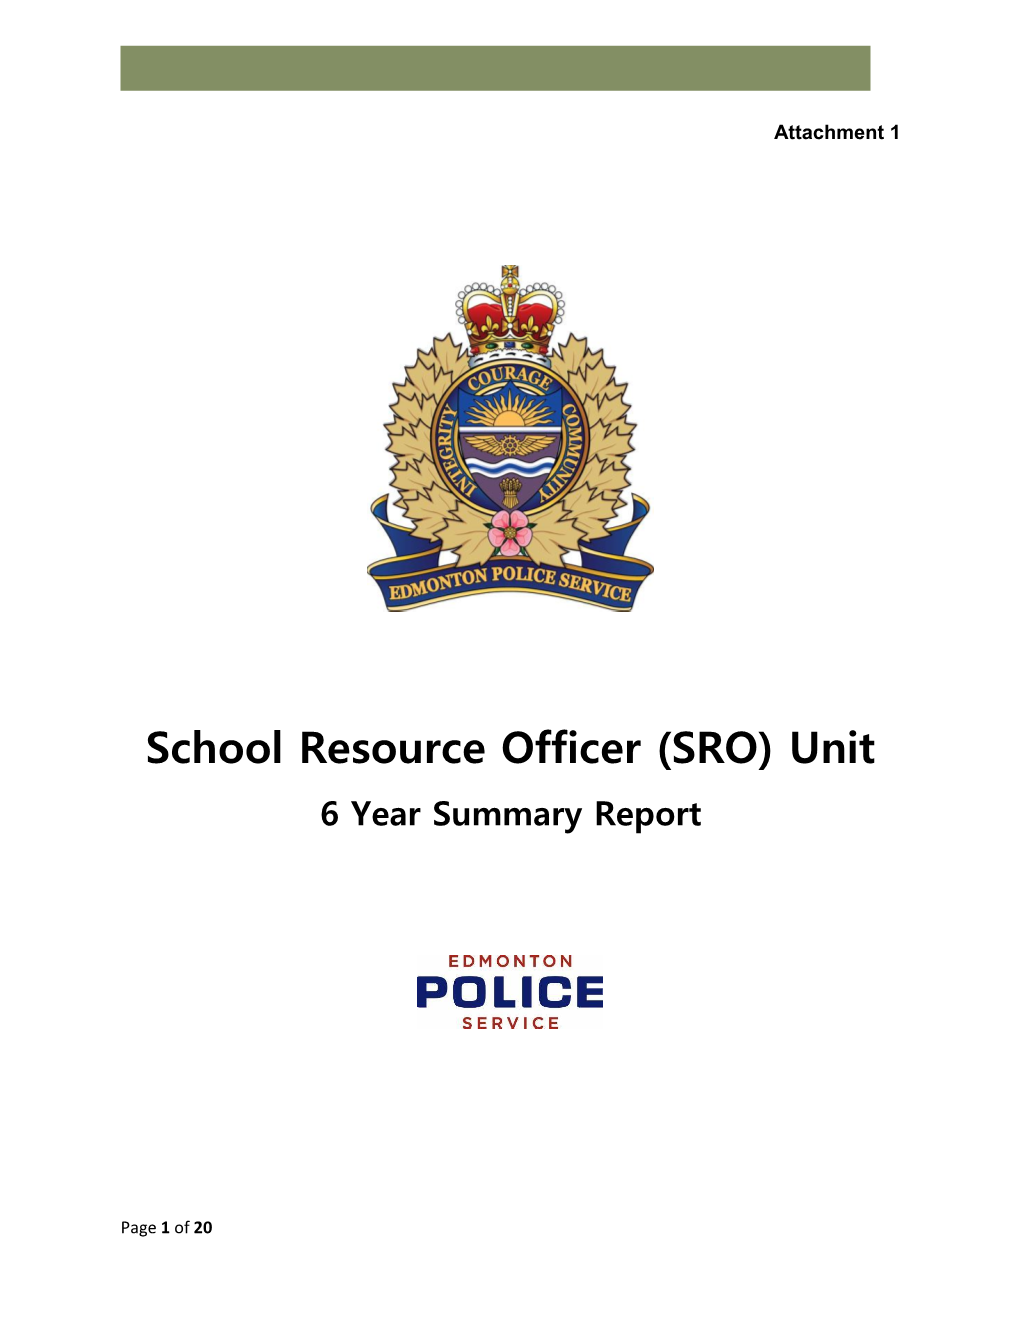 School Resource Officer (SRO) Unit 6 Year Summary Report